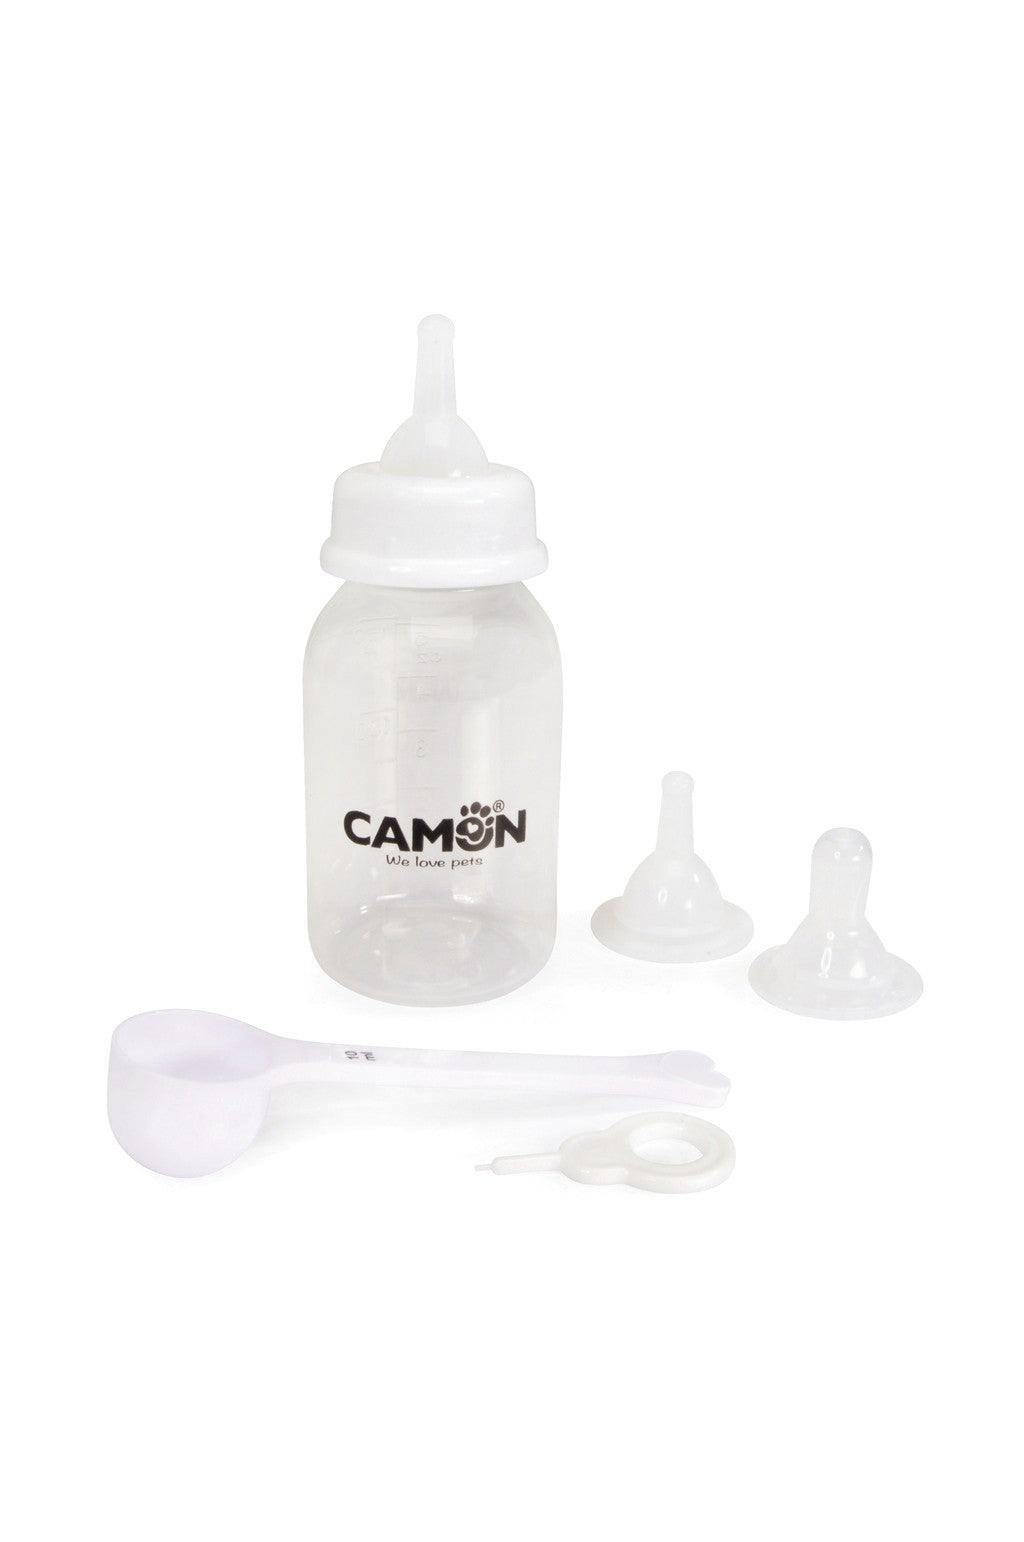 Camon Nursing Bottle Set (150ml) with Measuring Spoon and Teat Piercing Needle